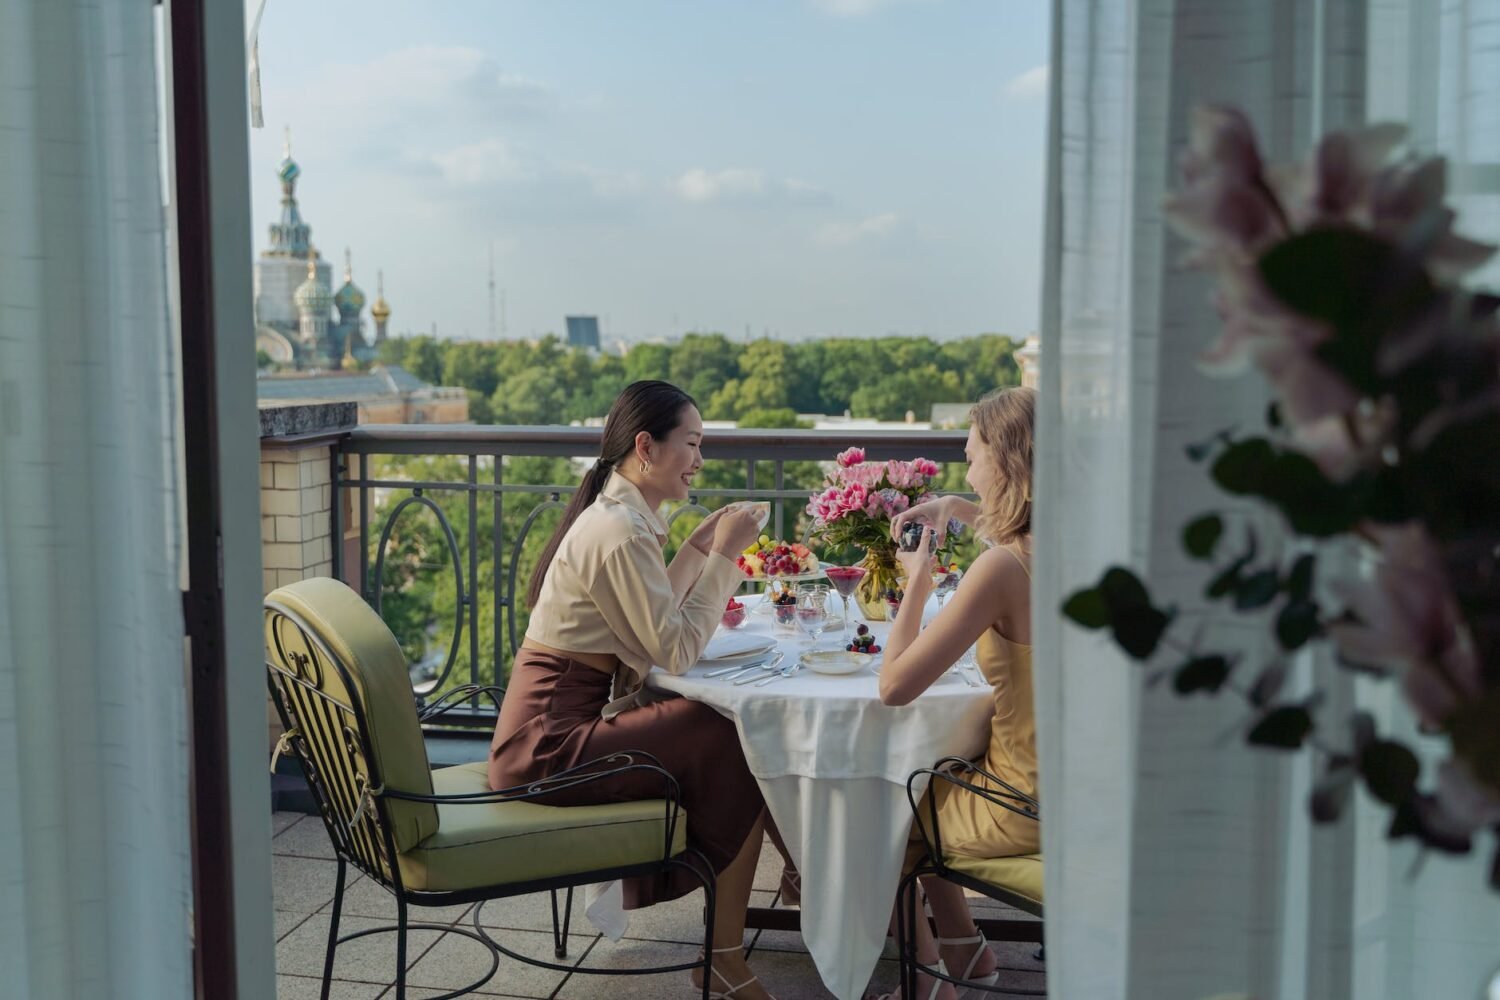 women having dinner at the balcony while having conversation